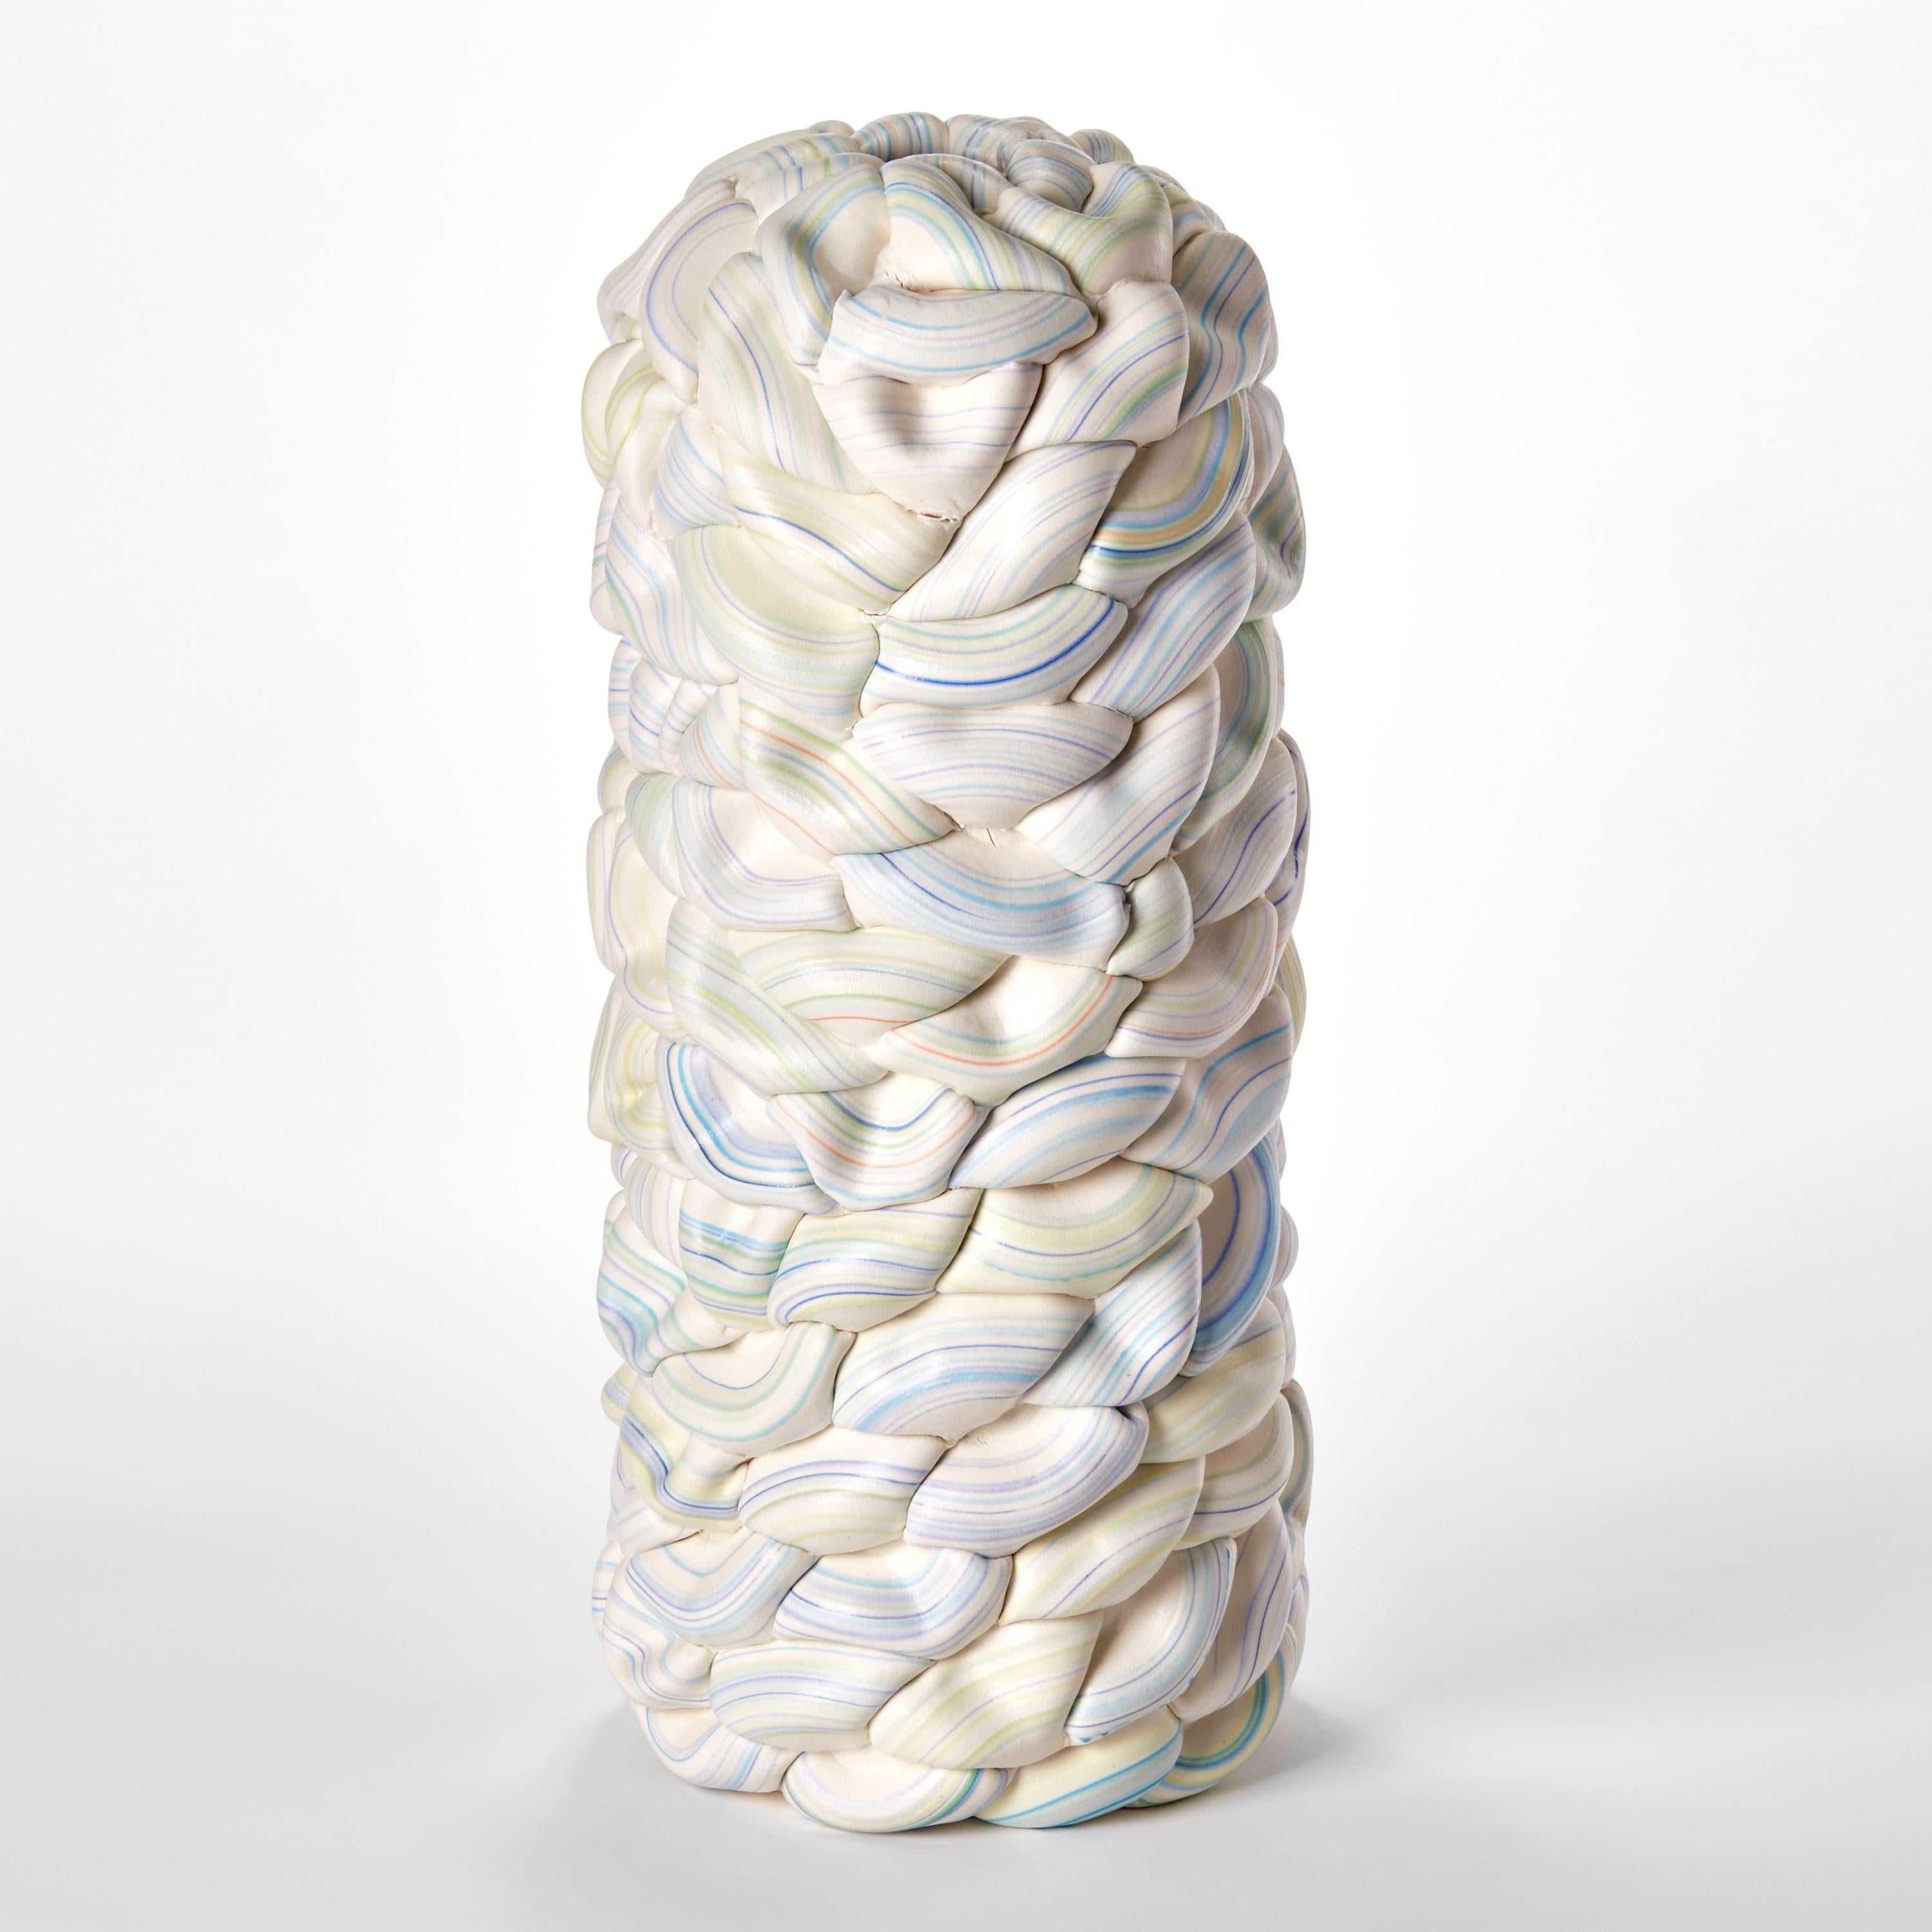 Organic Modern Striped Symmetry Fold VI, white, blue & yellow ceramic vessel by Steven Edwards For Sale